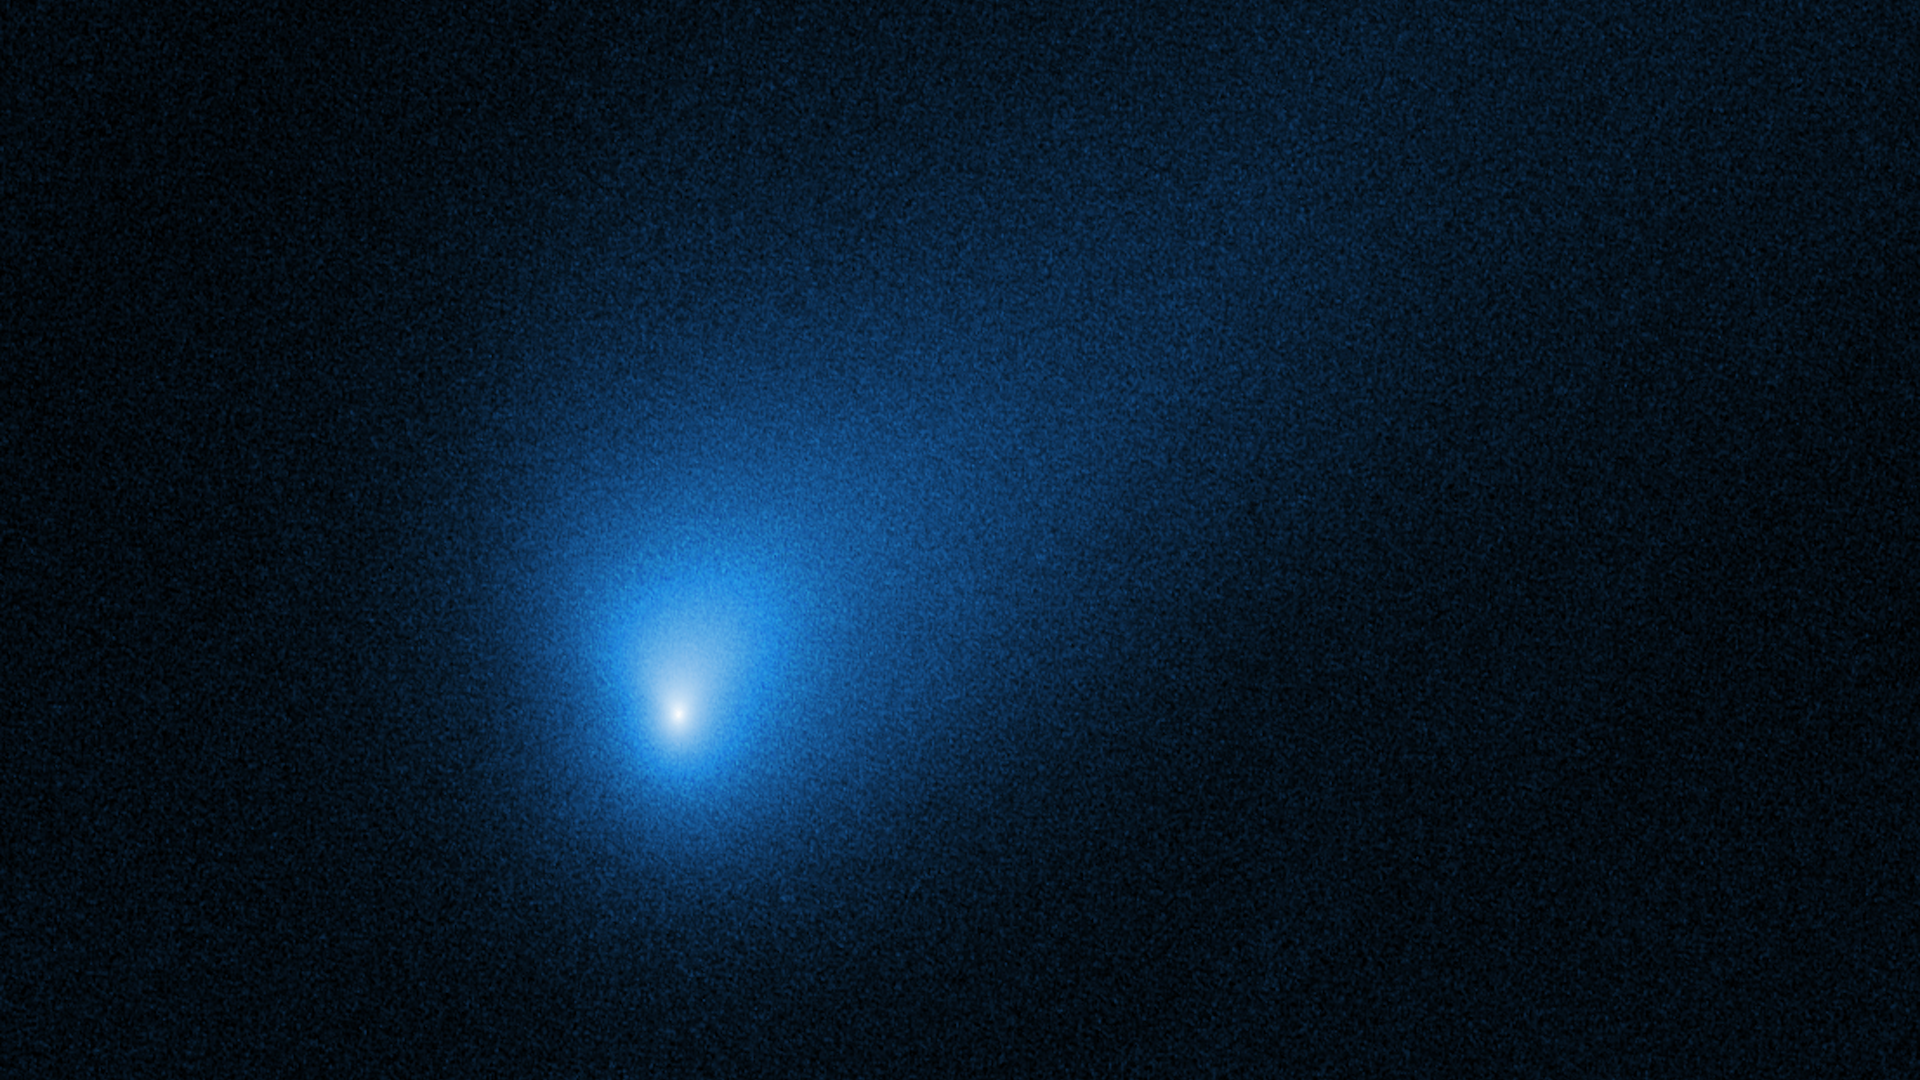 Comet Borisov as seen by the Hubble Space Telescope. Photo: NASA/ESA